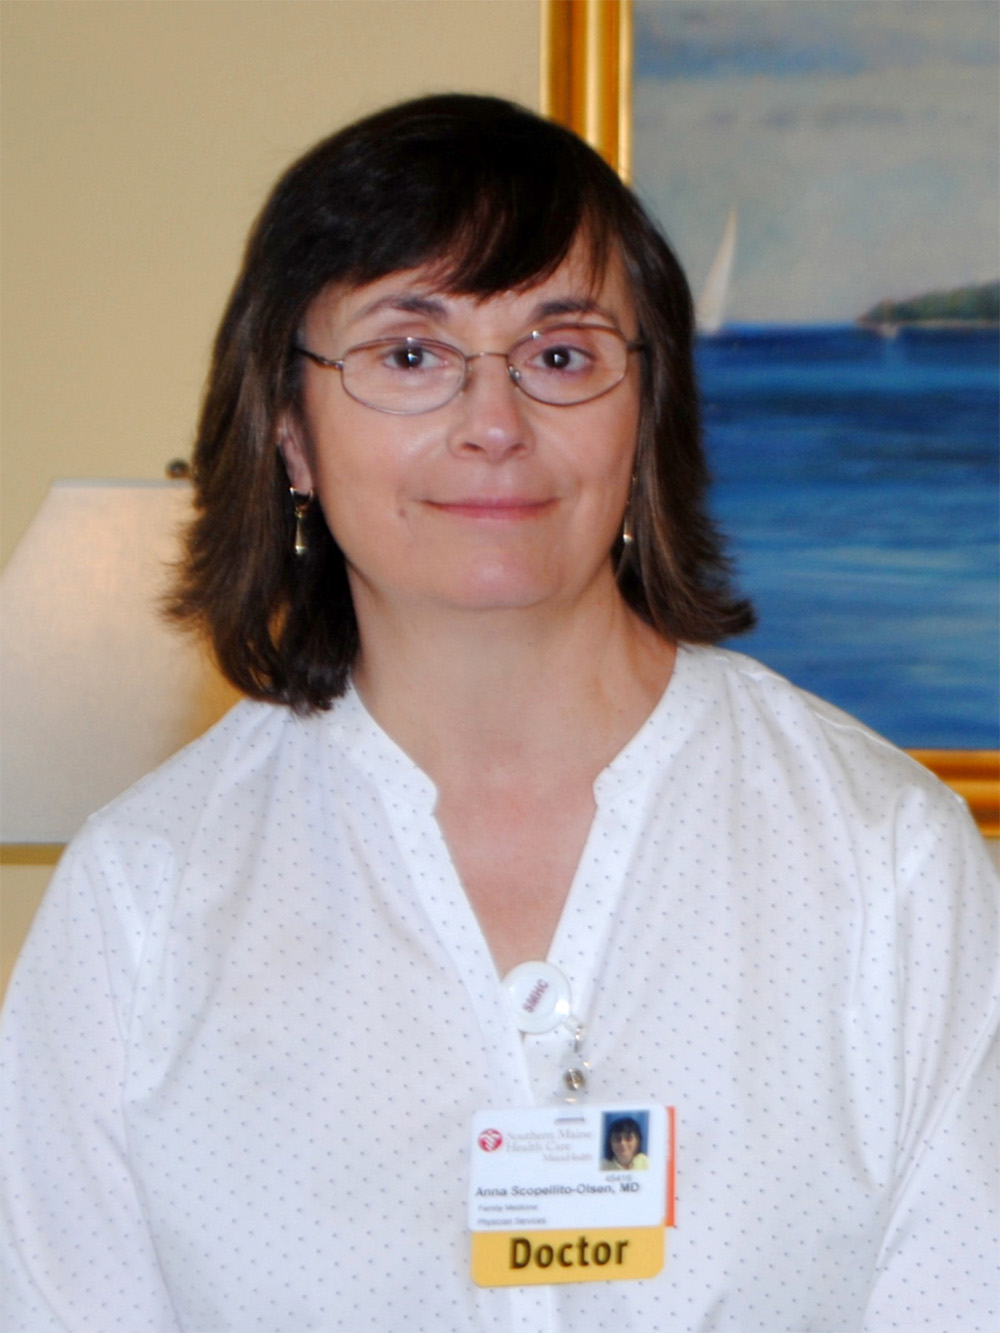 Anna M Scopellito-Olsen, MD